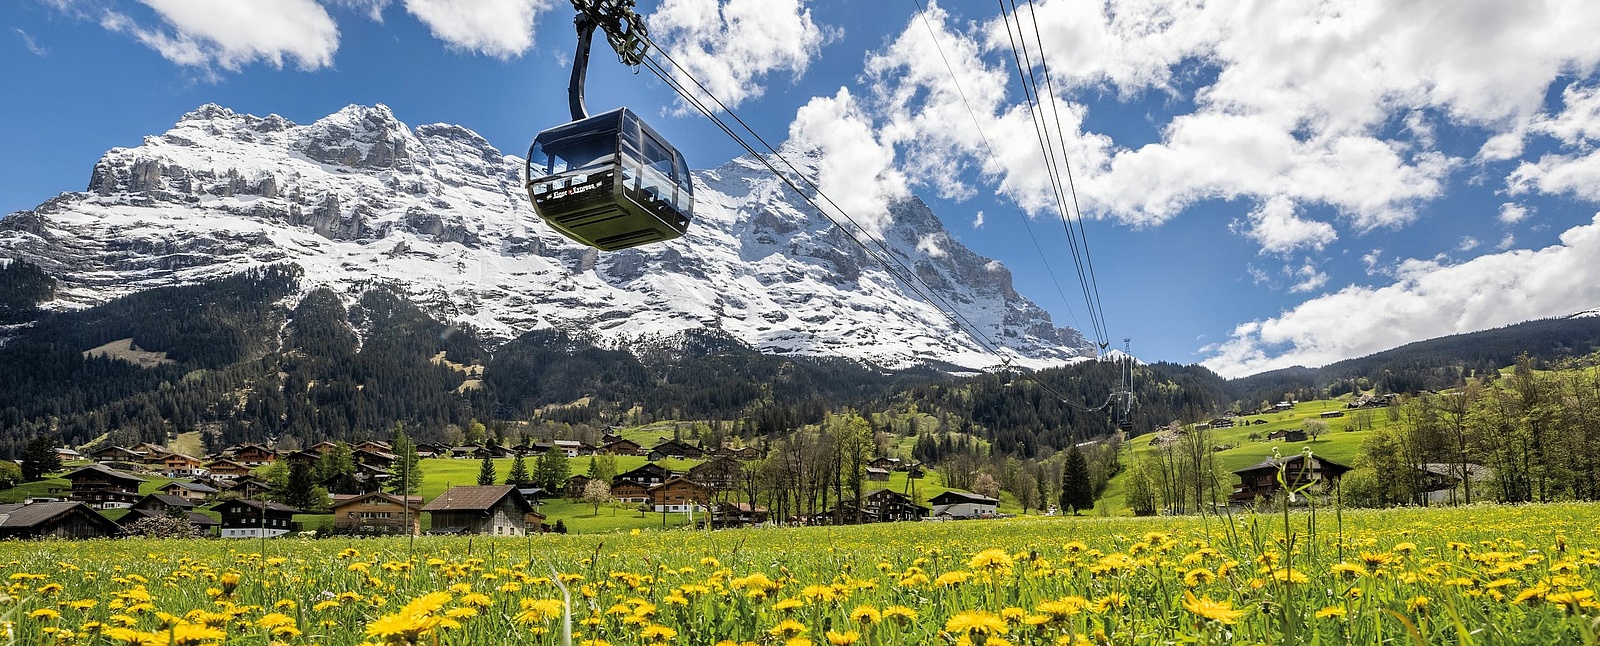 Foto: Jungfrau.ch